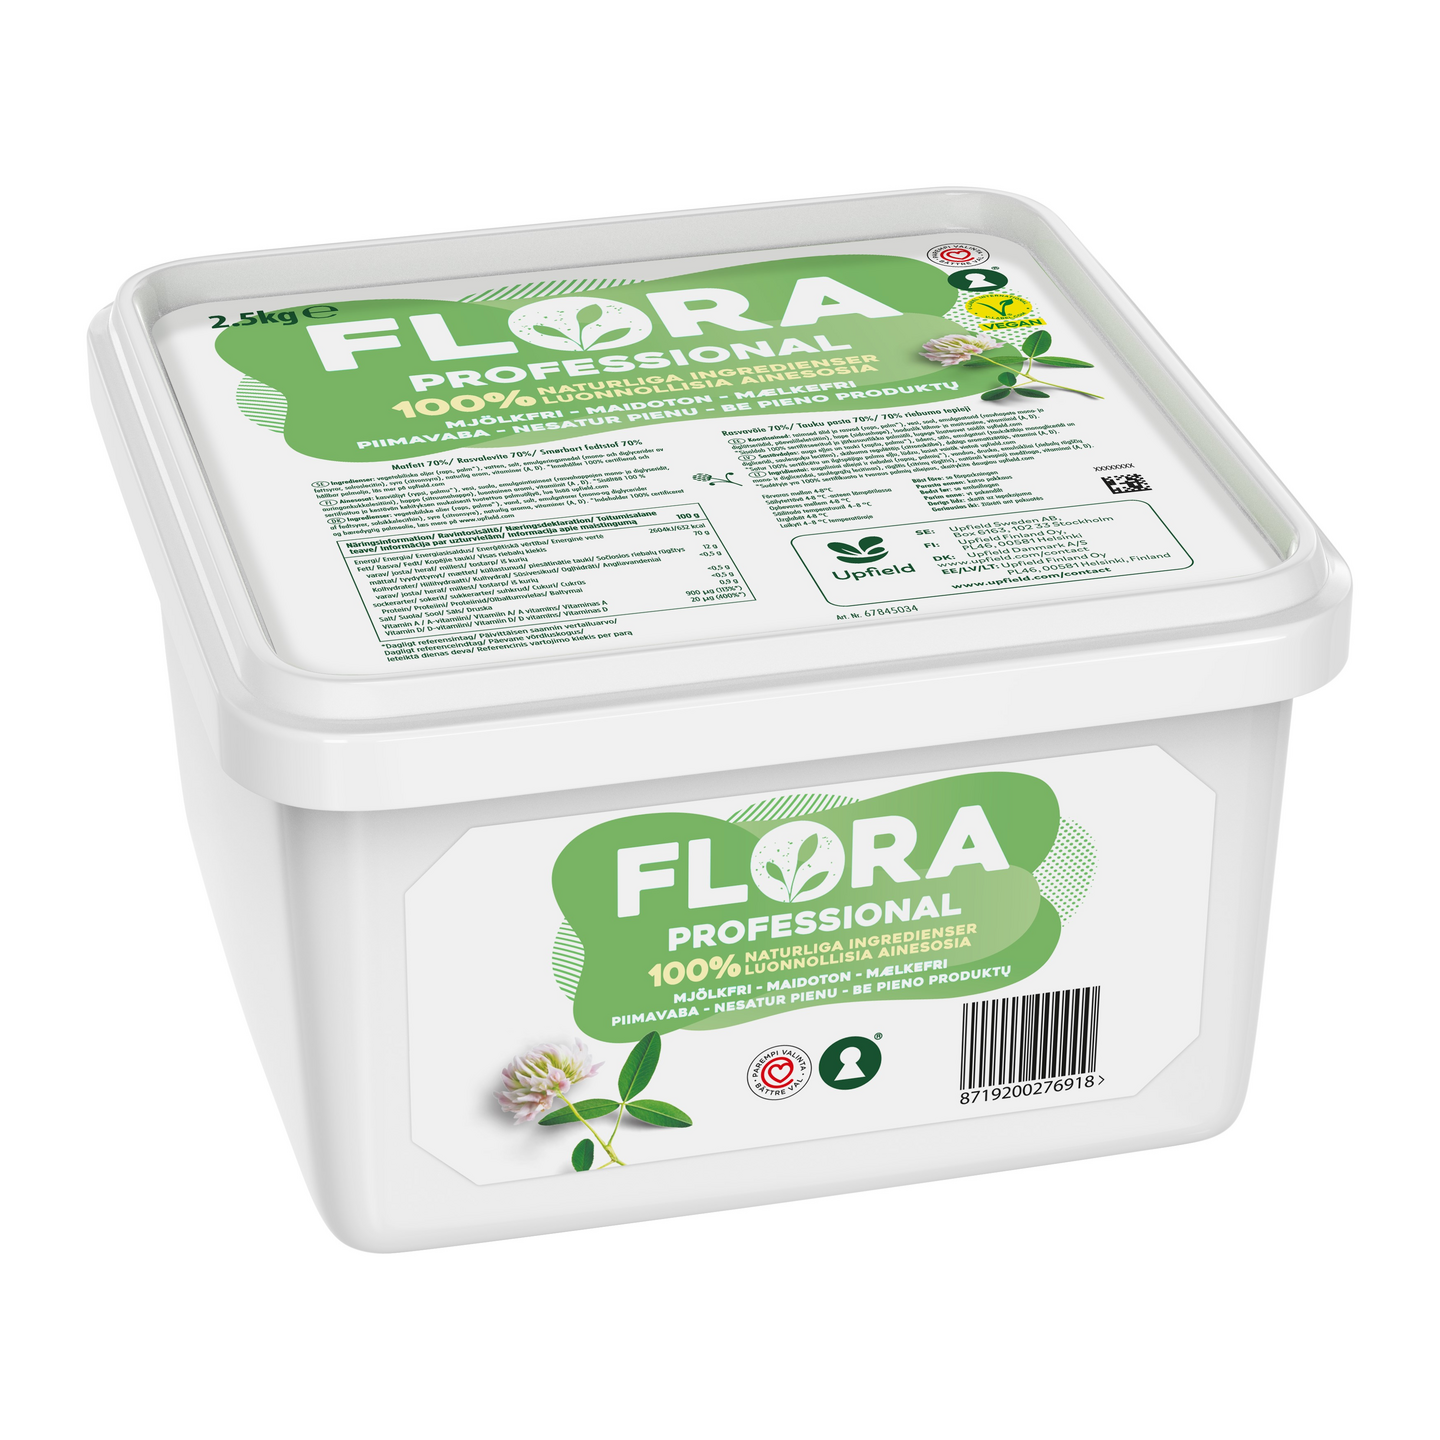 Flora Professional maidoton kasvirasvalevite 75% 2,5kg